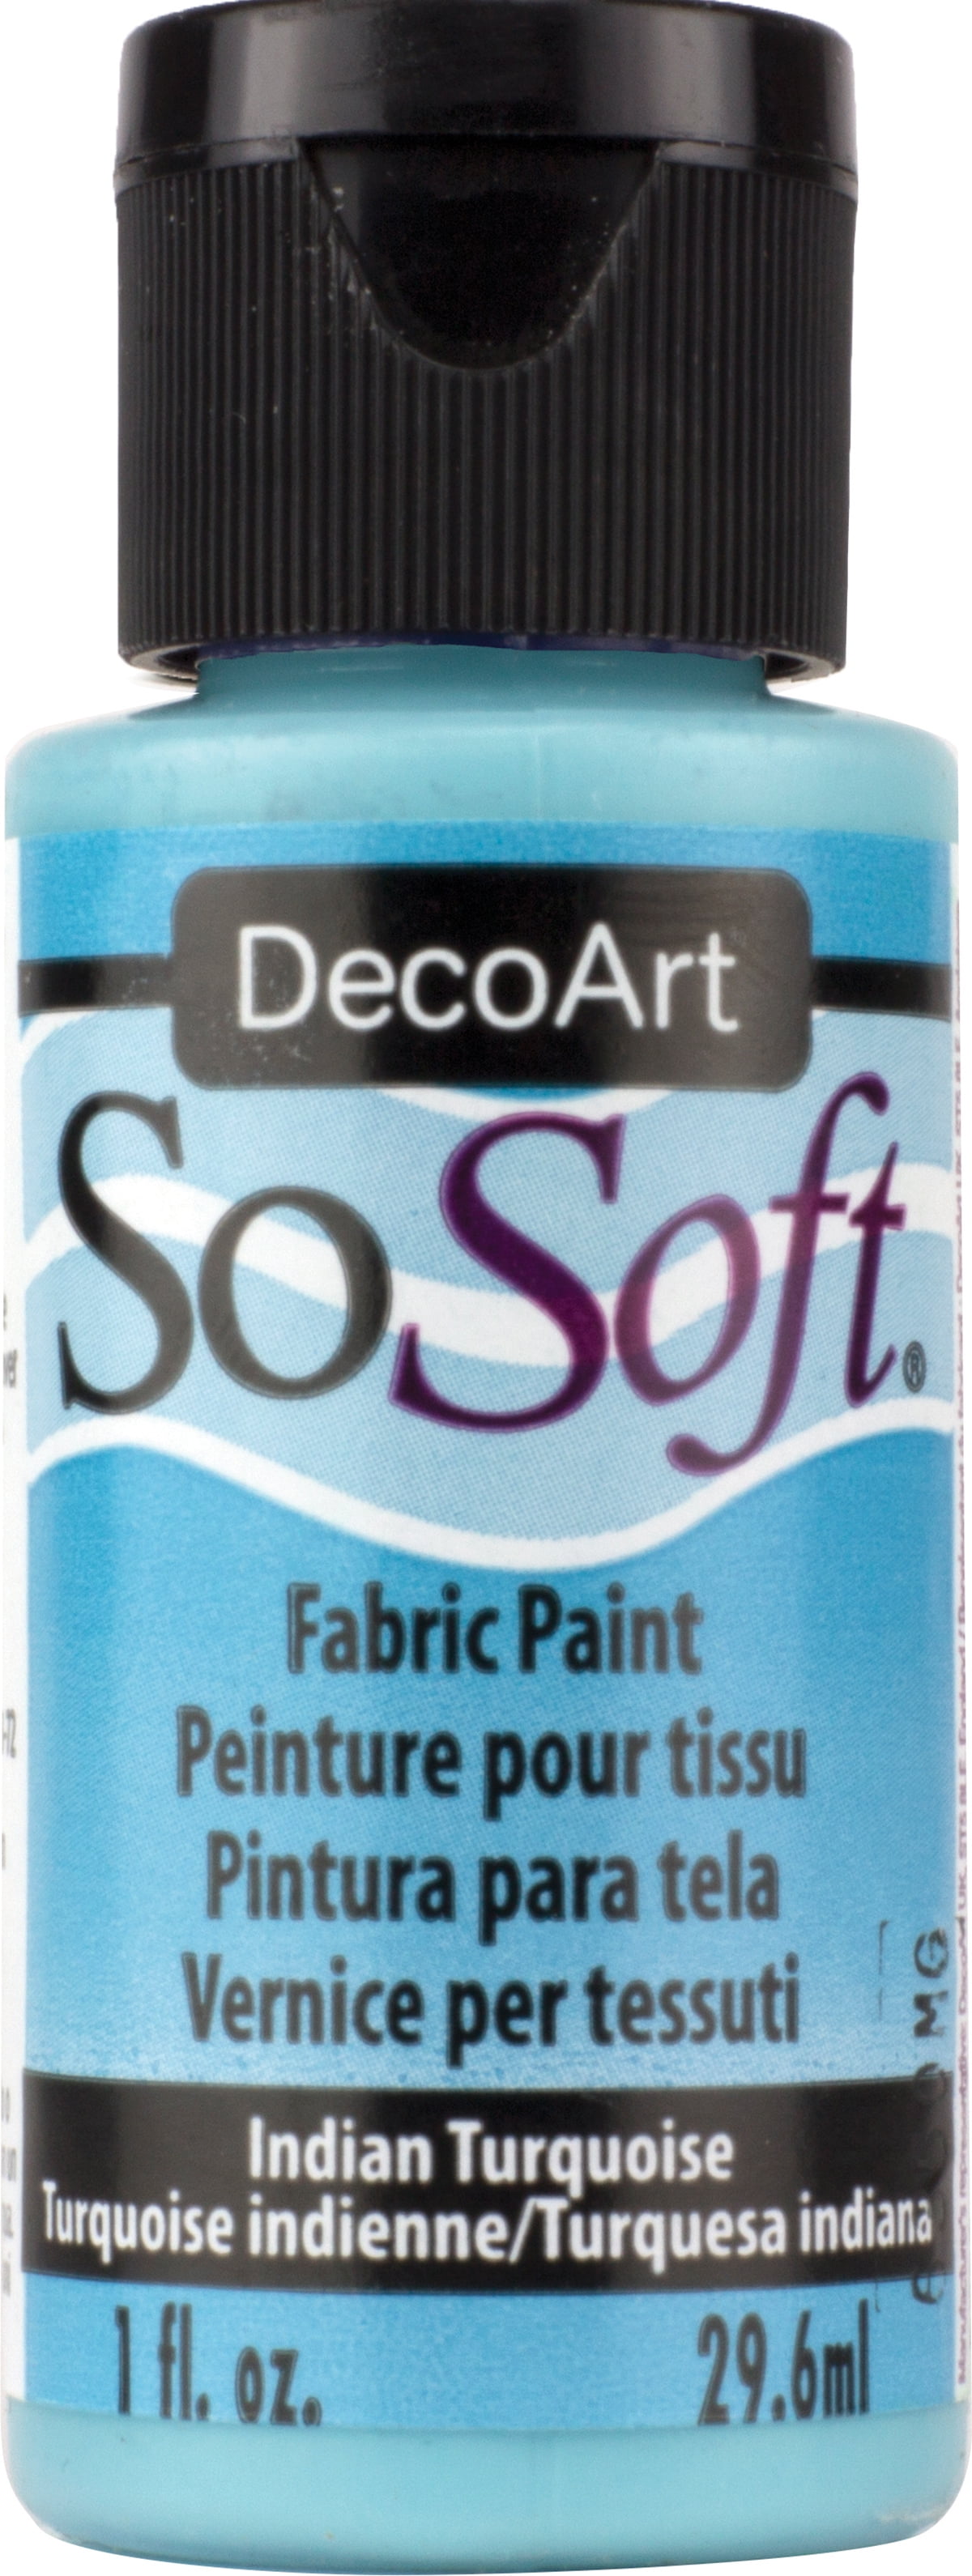 Decoart SoSoft Fabric Paint 1oz Santa Red, 1 - Fry's Food Stores